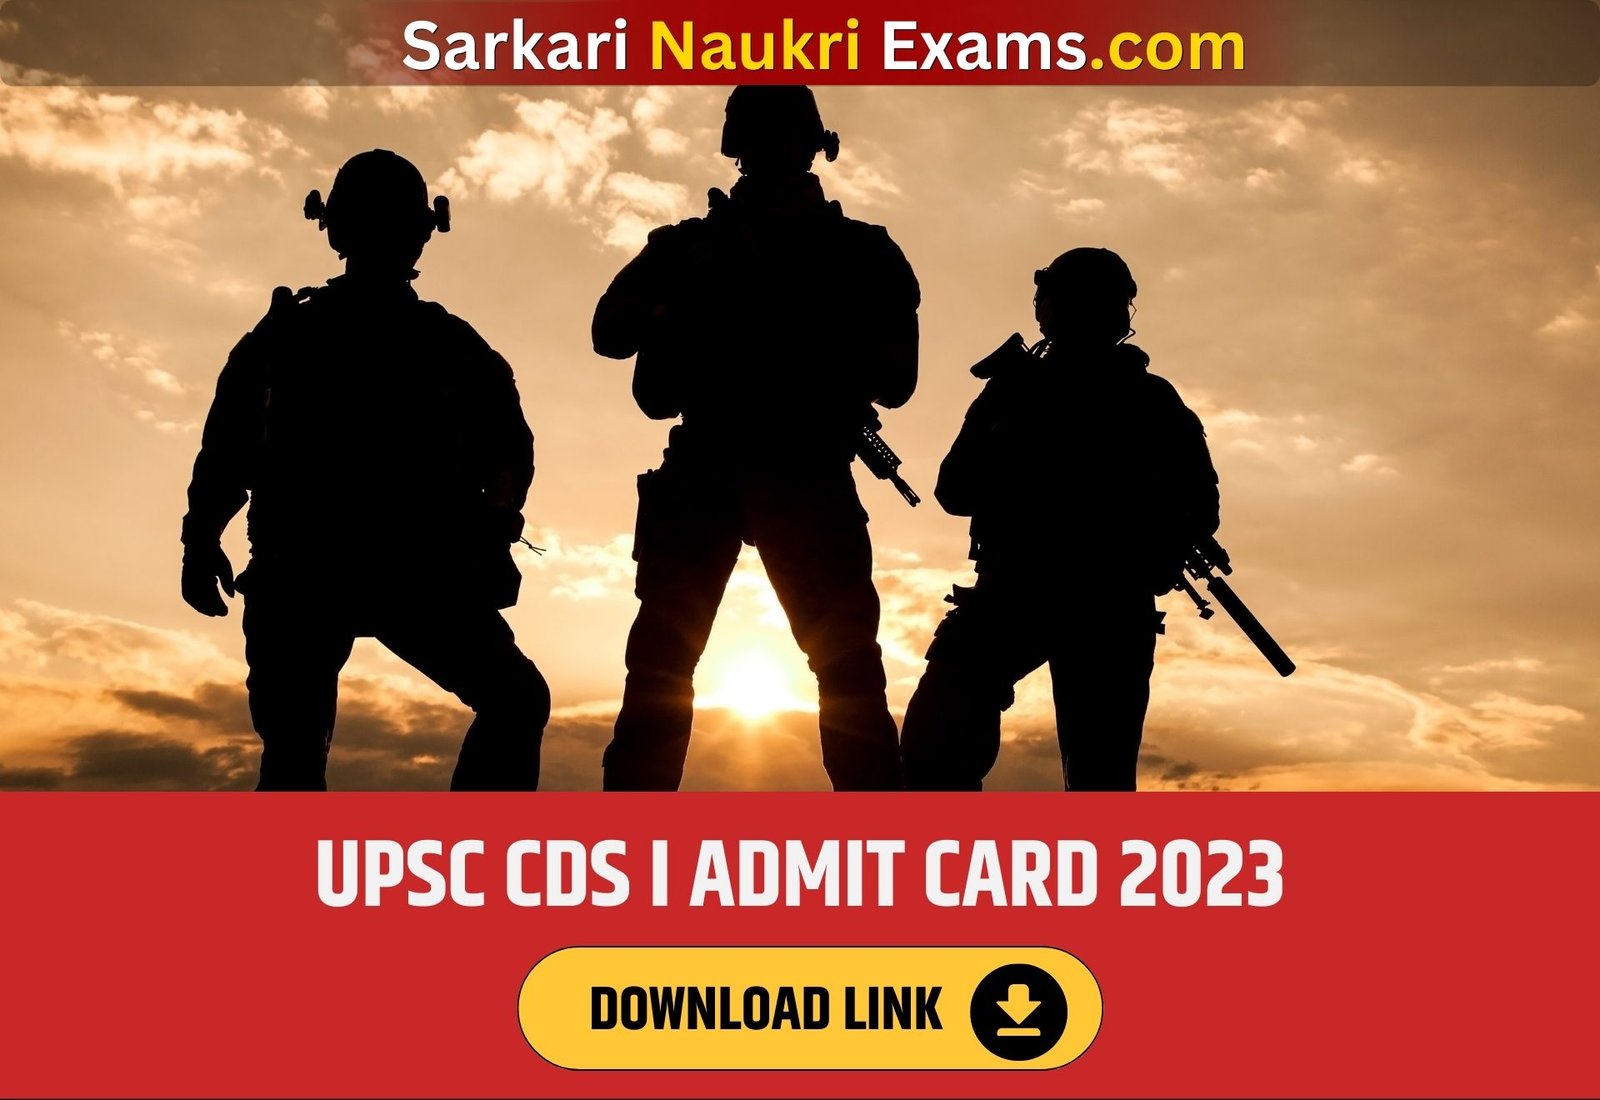 UPSC CDS I Admit Card 2023 | Download Link, Exam Date